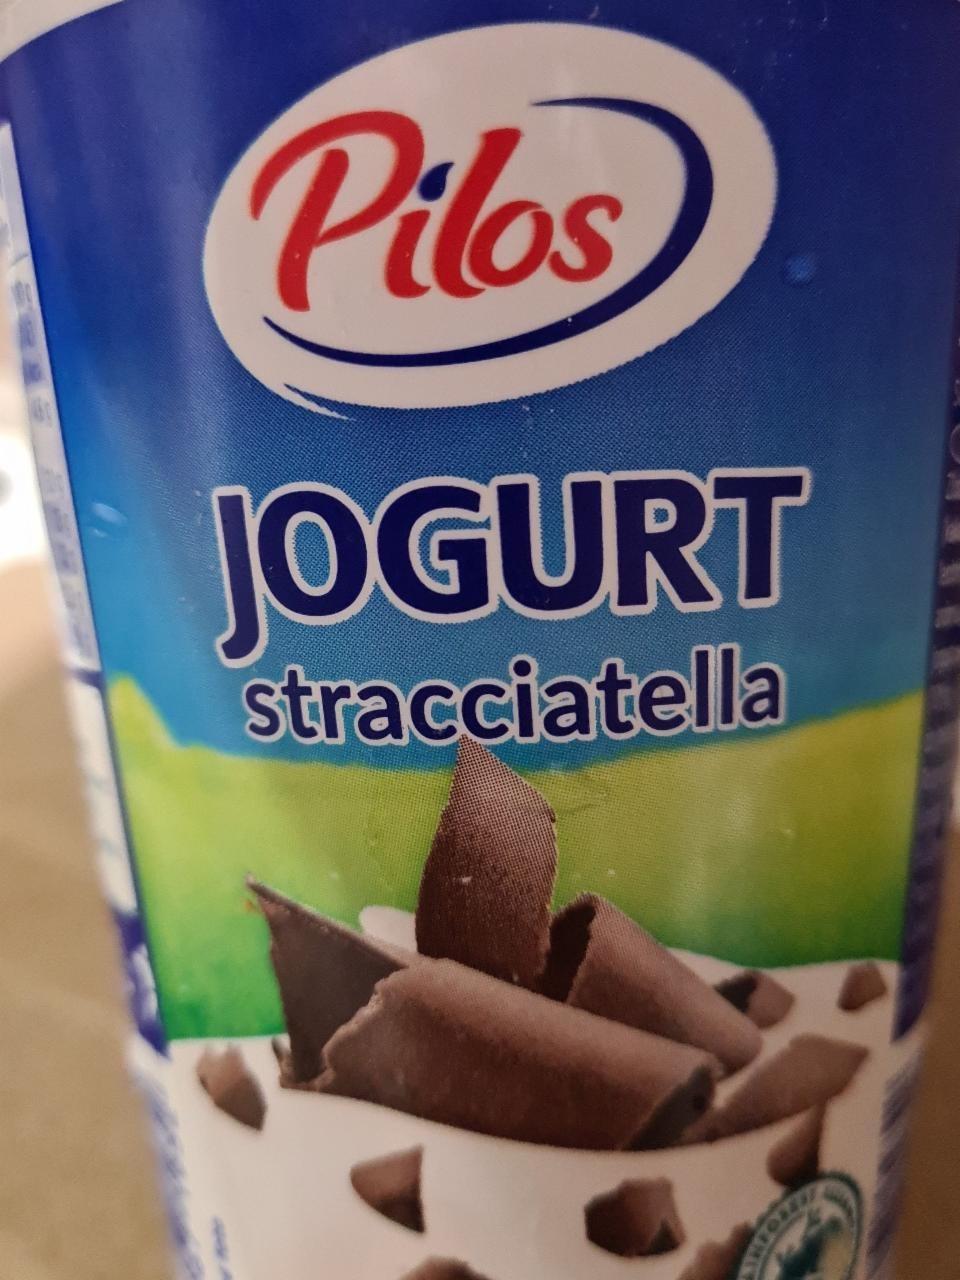 Képek - Joghurt stracciatella Pilos